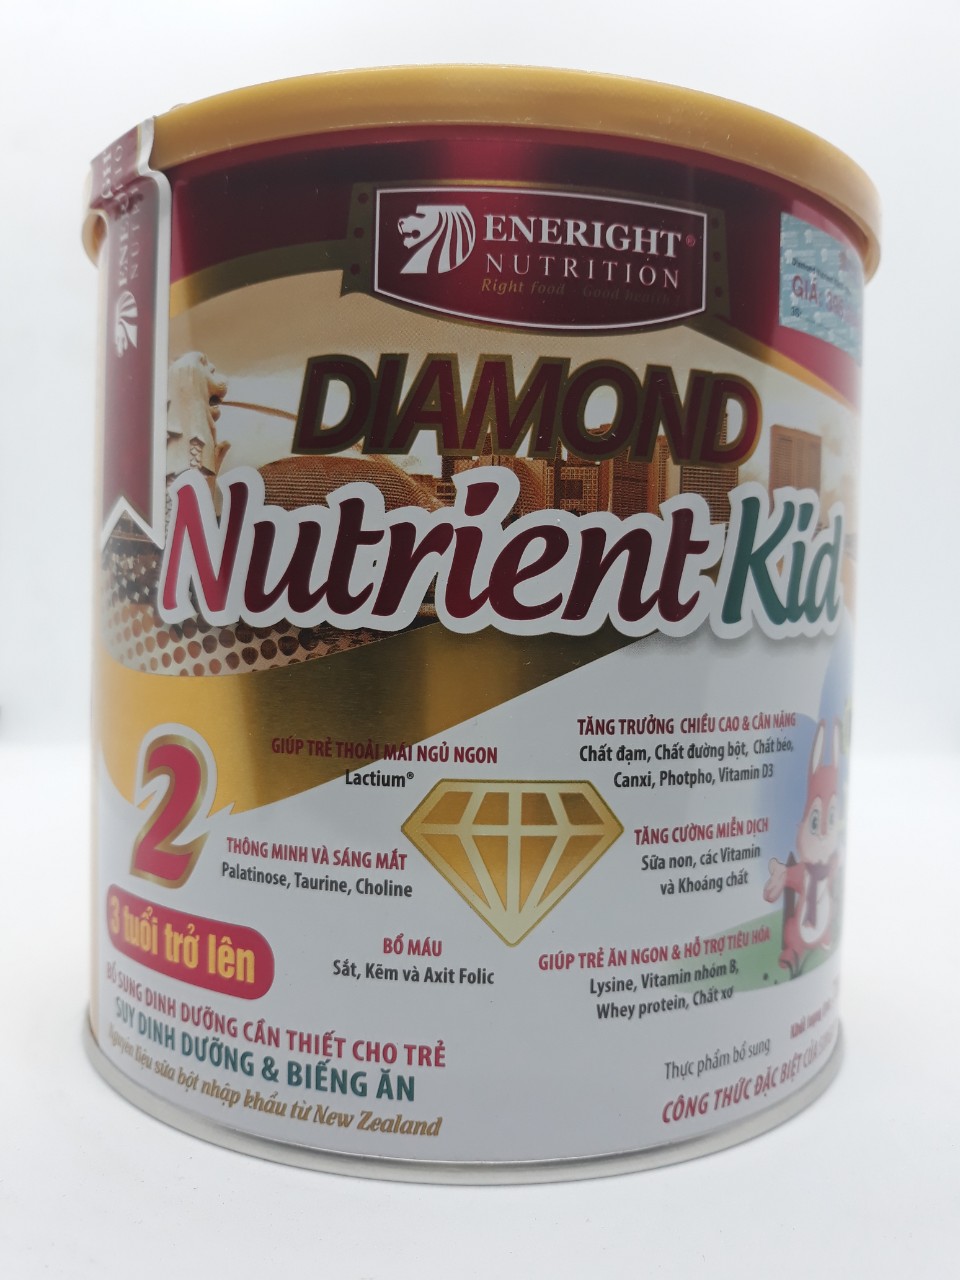 Sữa Diamond Nutrient Kid 2 700g ( Cho trẻ từ 3 tuổi trở lên)